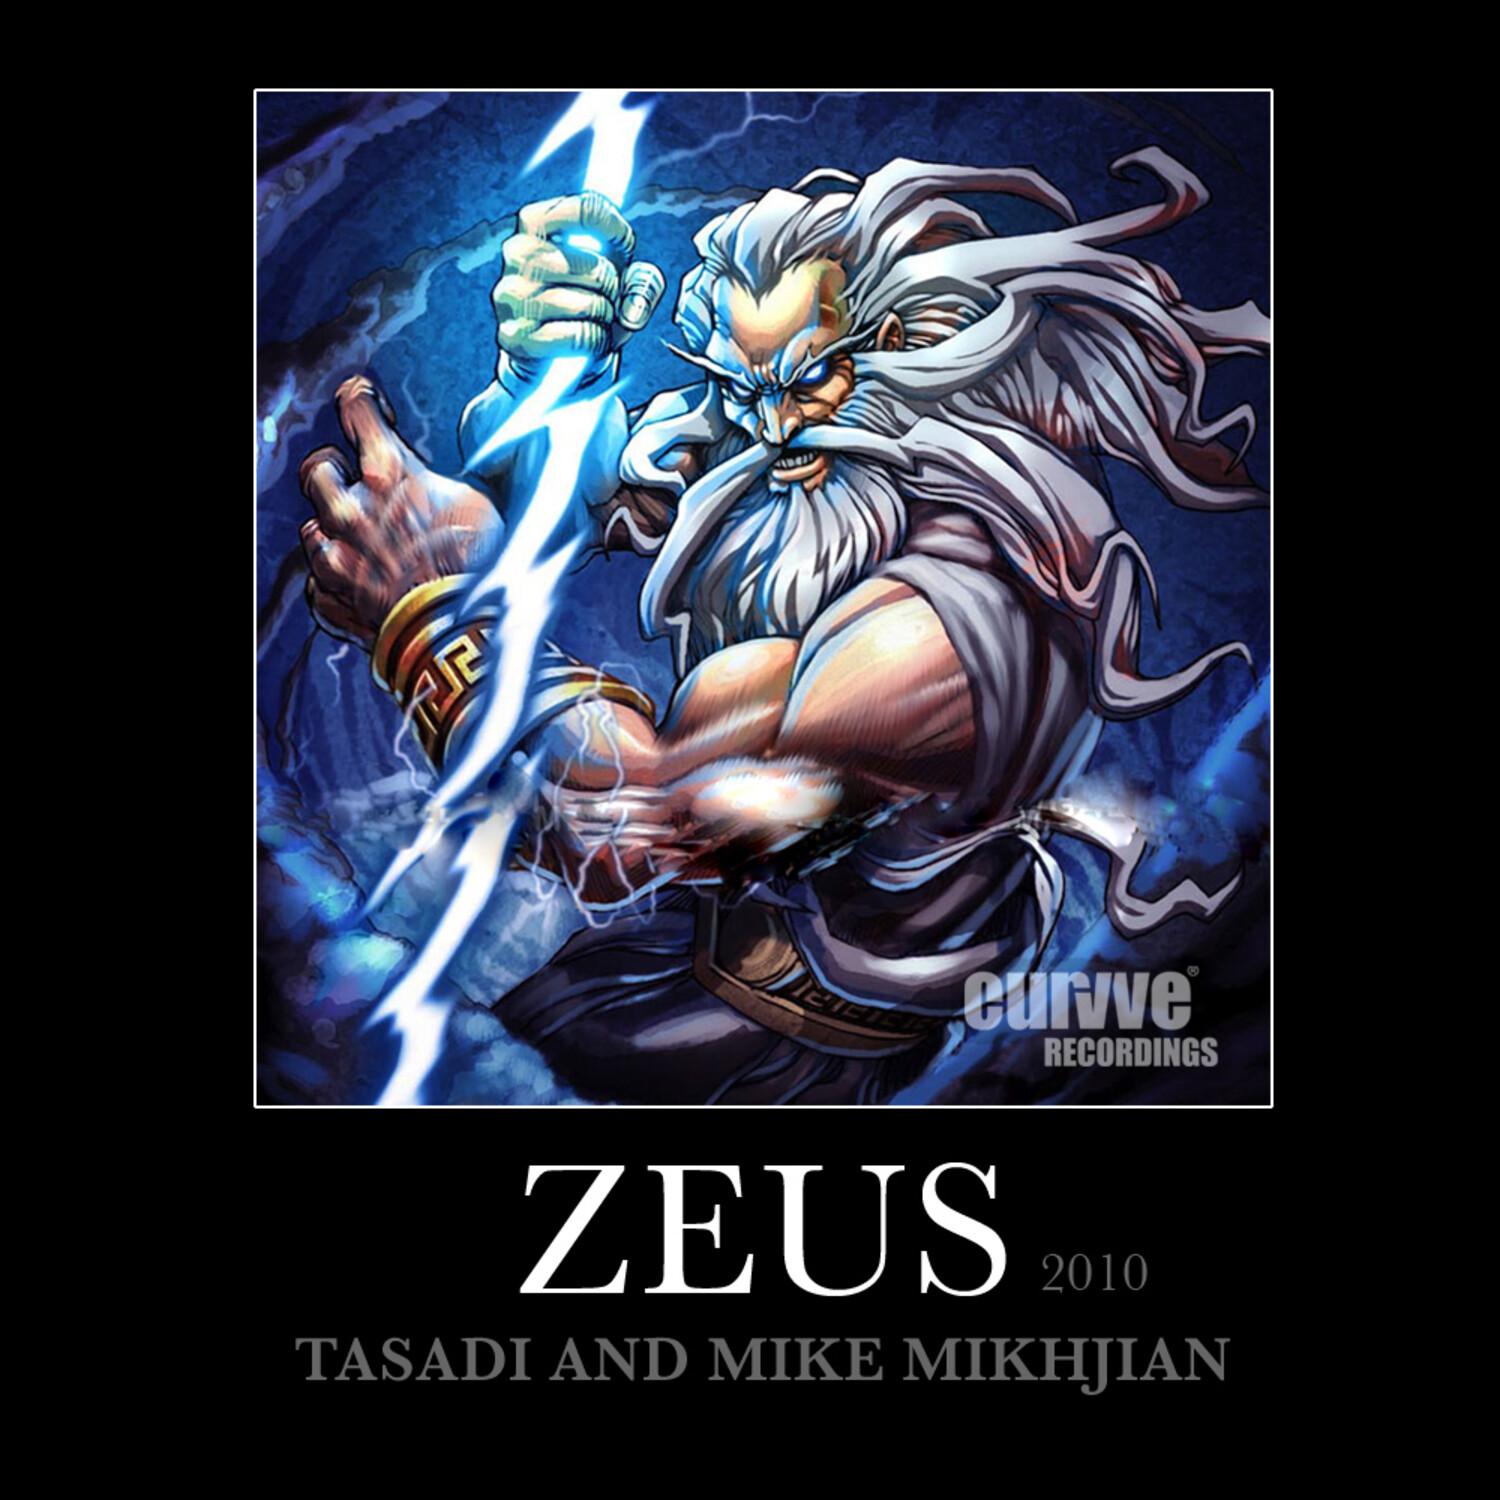 Tasadi - Zeus 2010 (Zeus got loose remix)